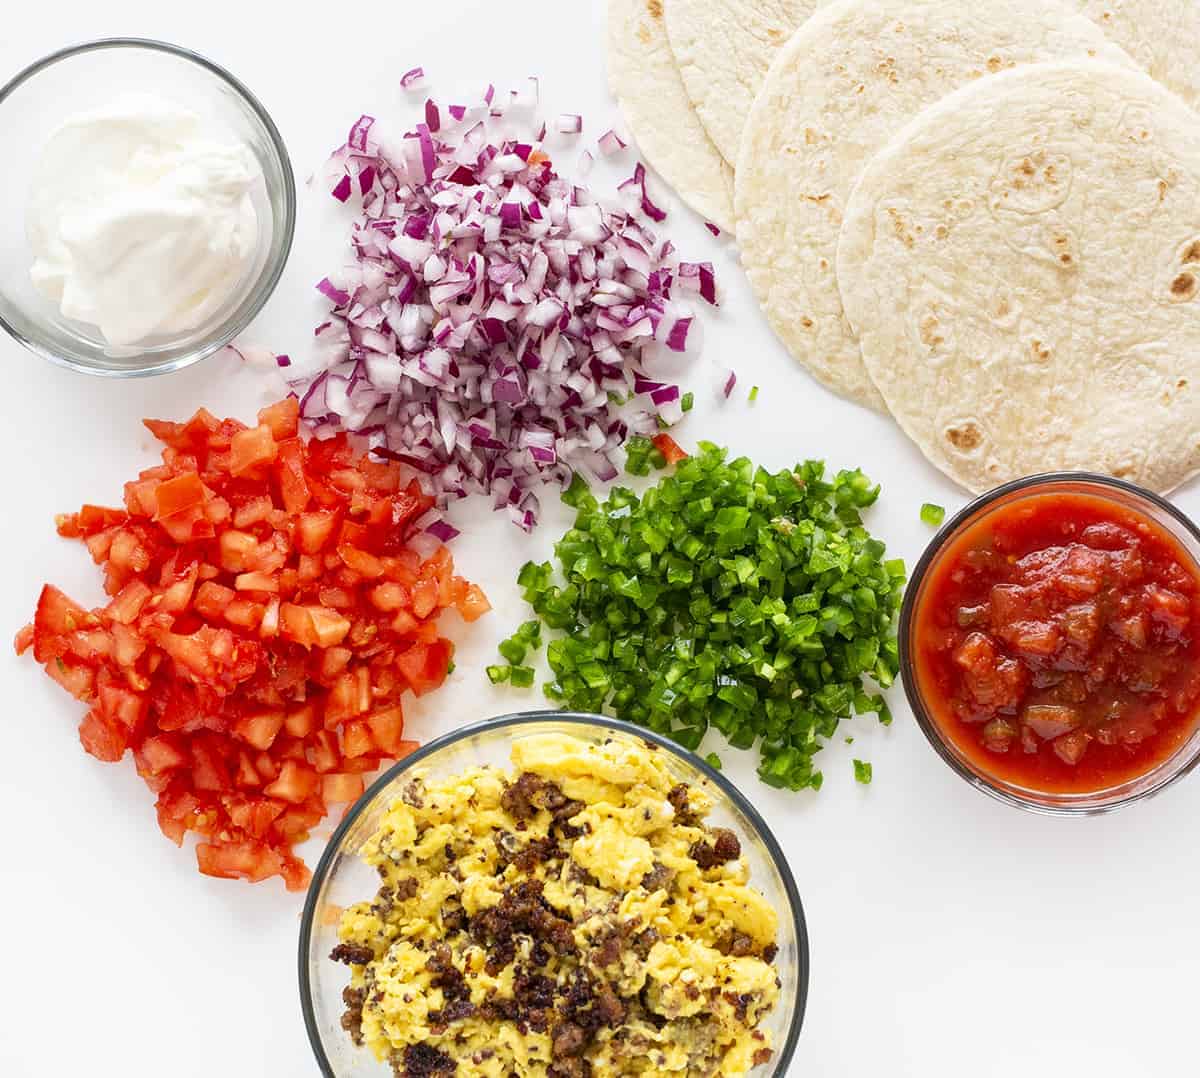 Ingredients for Breakfast Taco Recipe